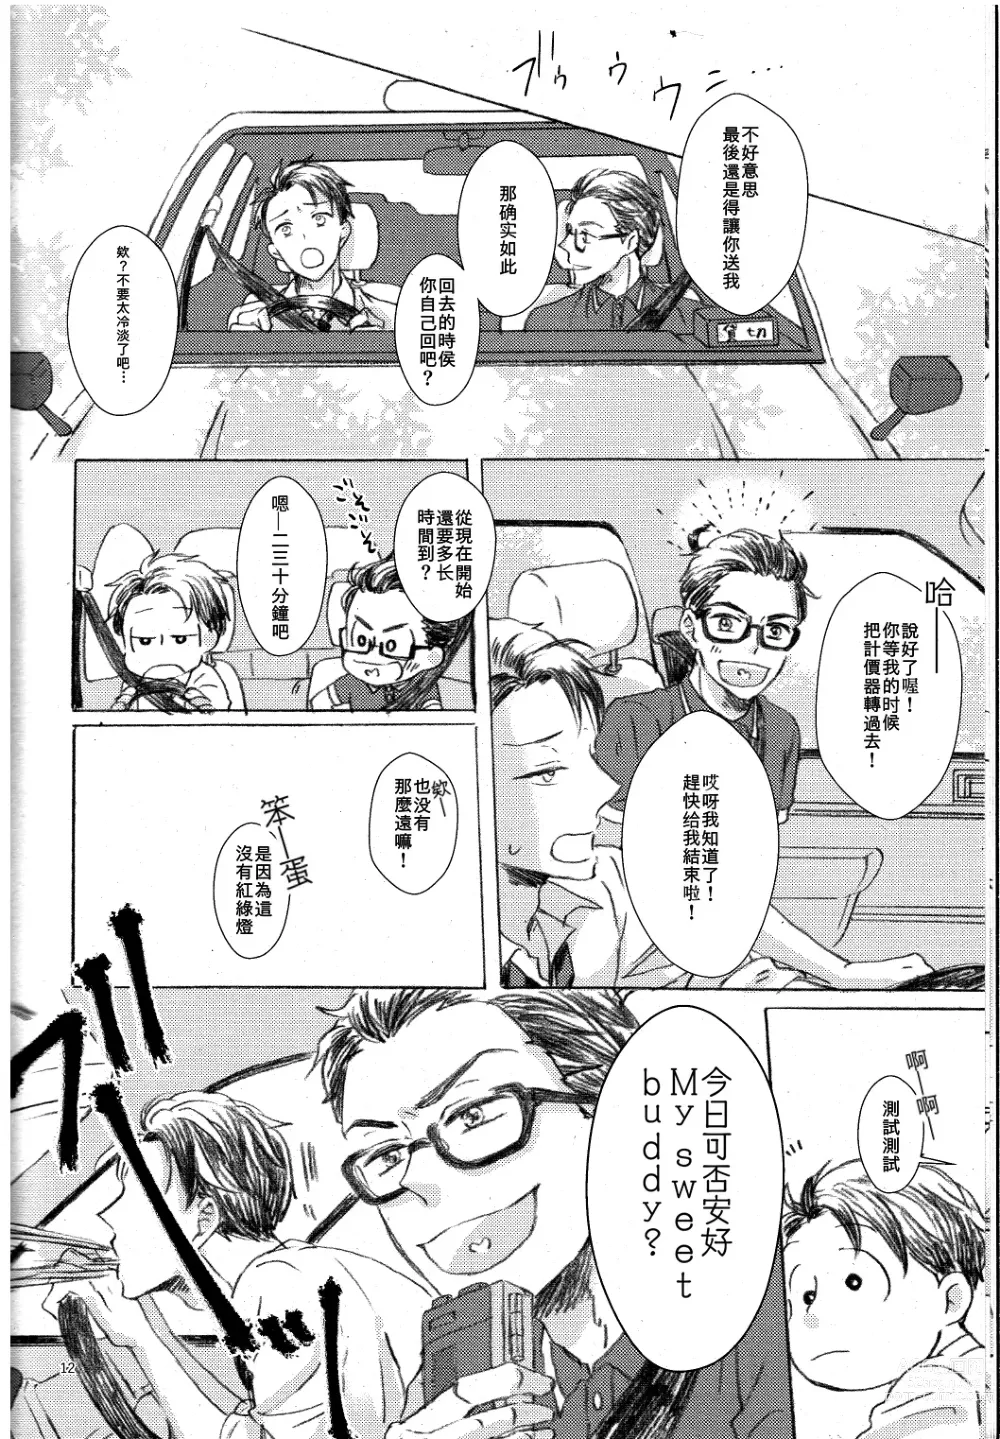 Page 10 of doujinshi Oni to Zaregoto